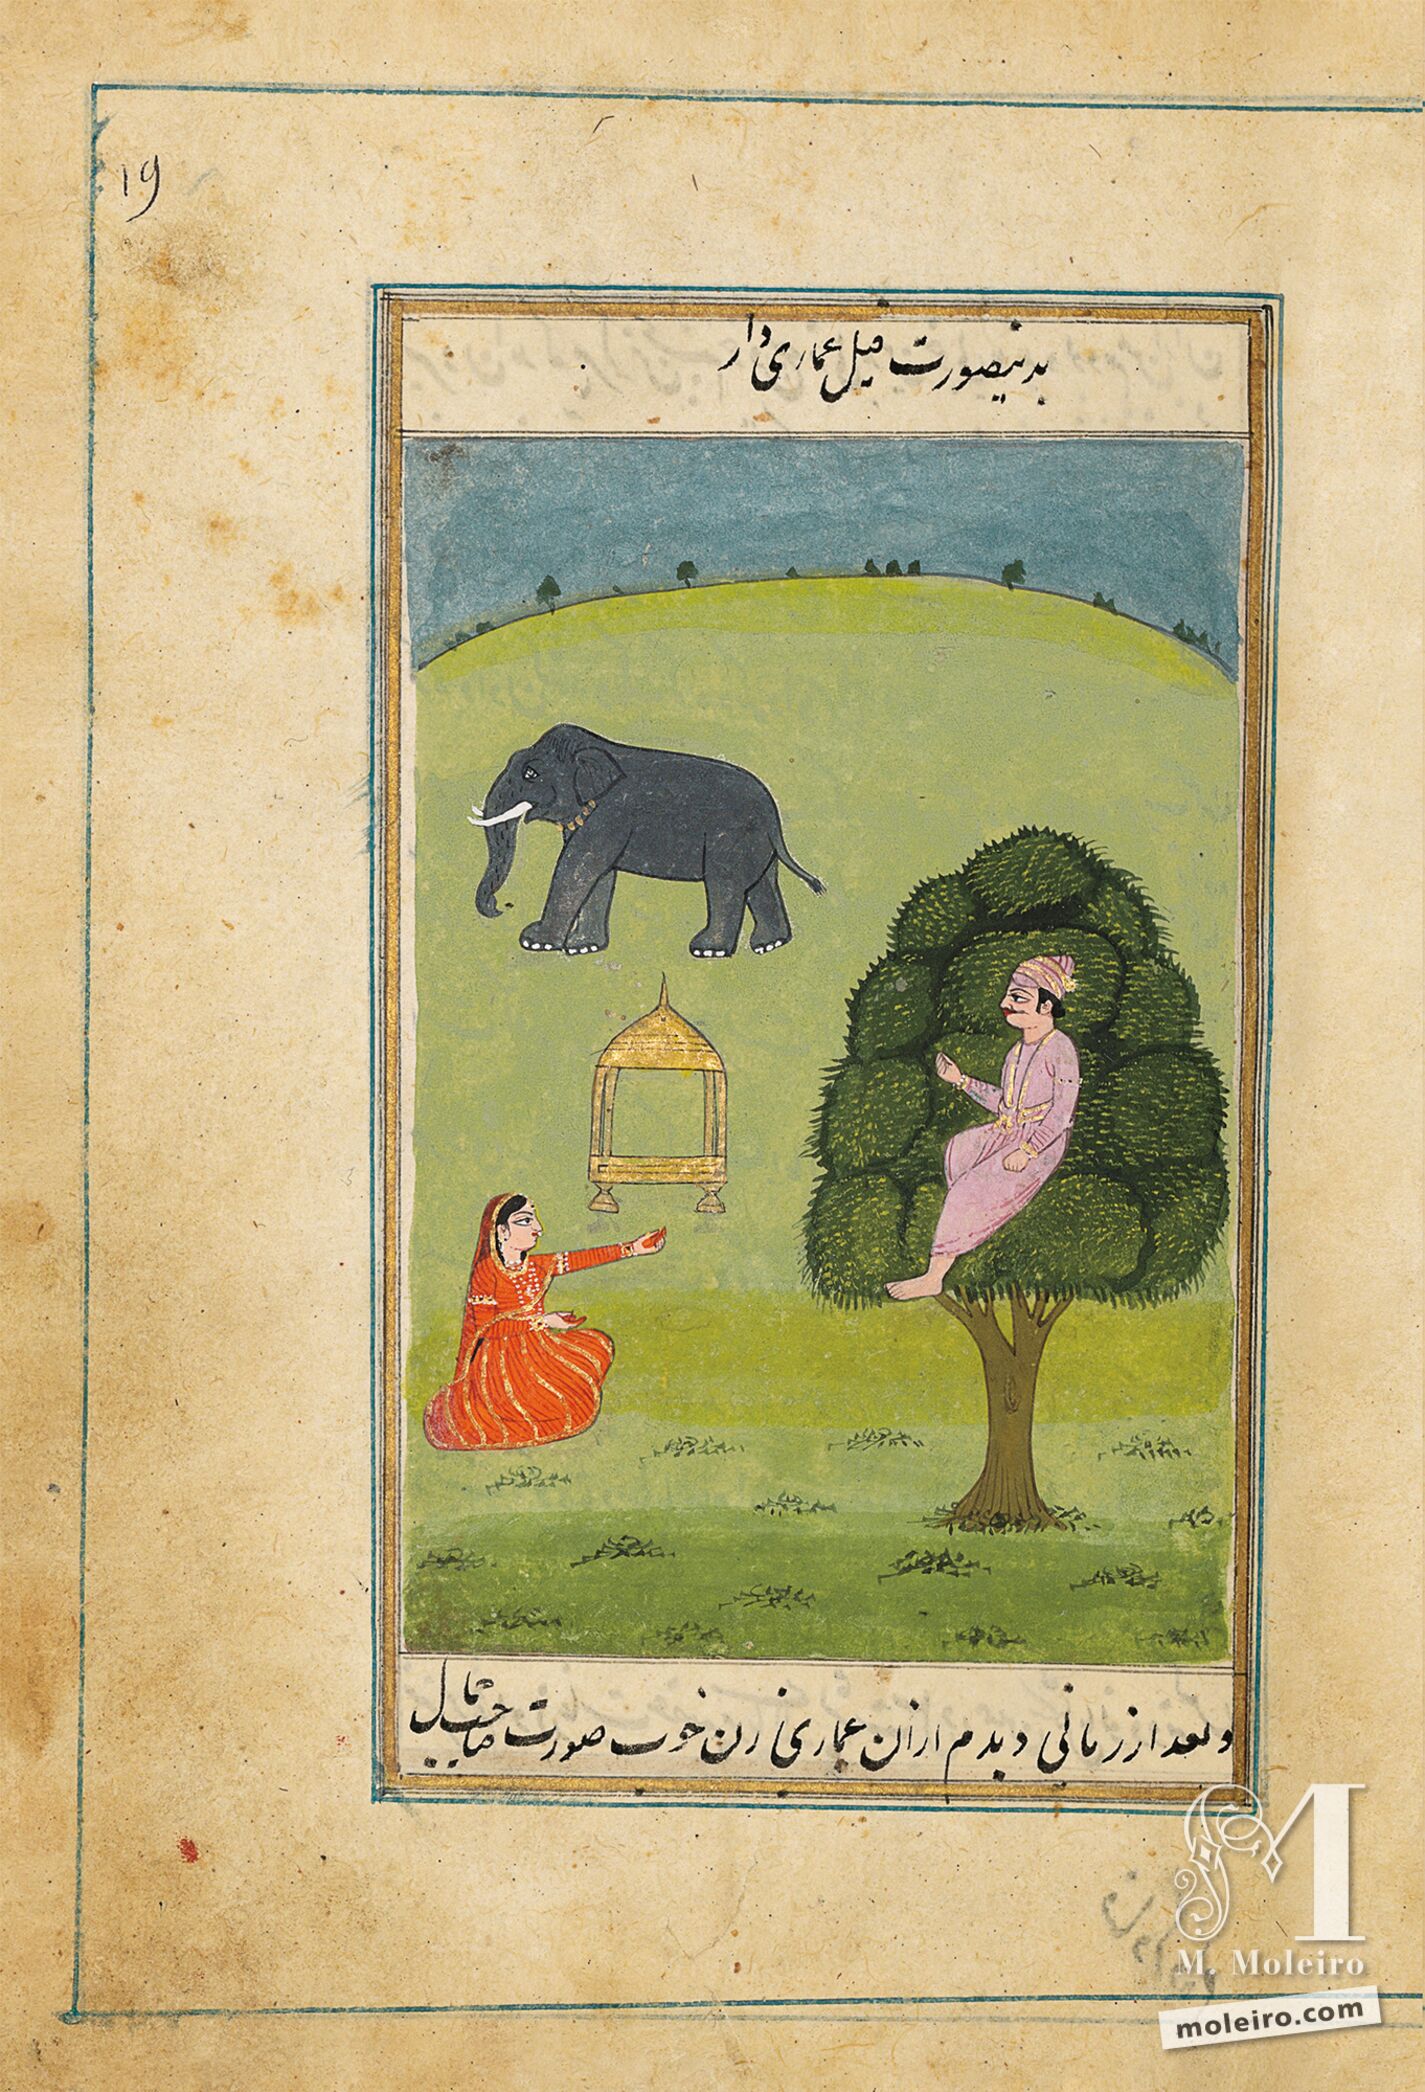 Elefante con howdah - f. 19r